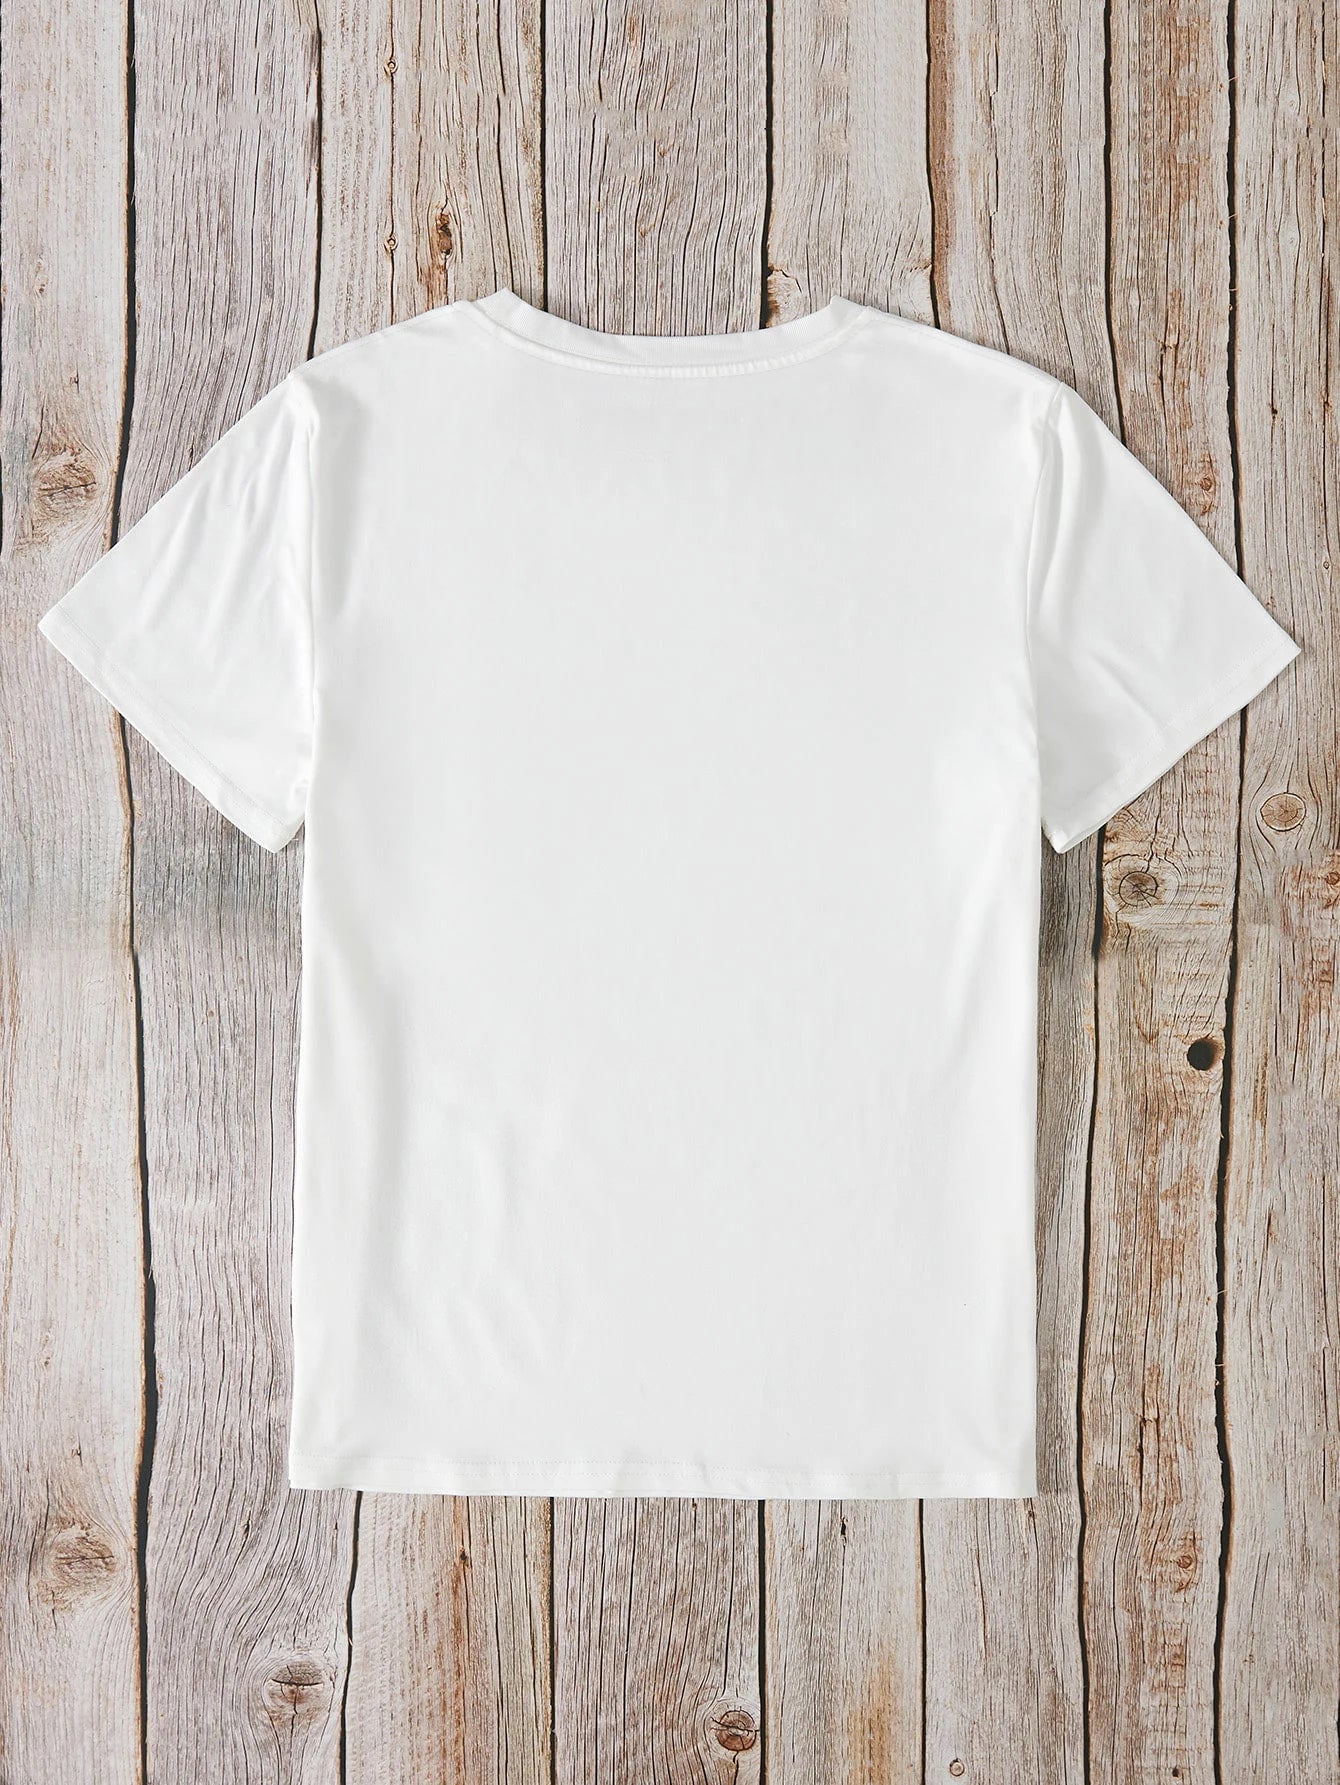 Casual Fashion Top Shirt, Letter Print Short Sleeve T-Shirt Round Neck T-Shirts, Women's Clothing